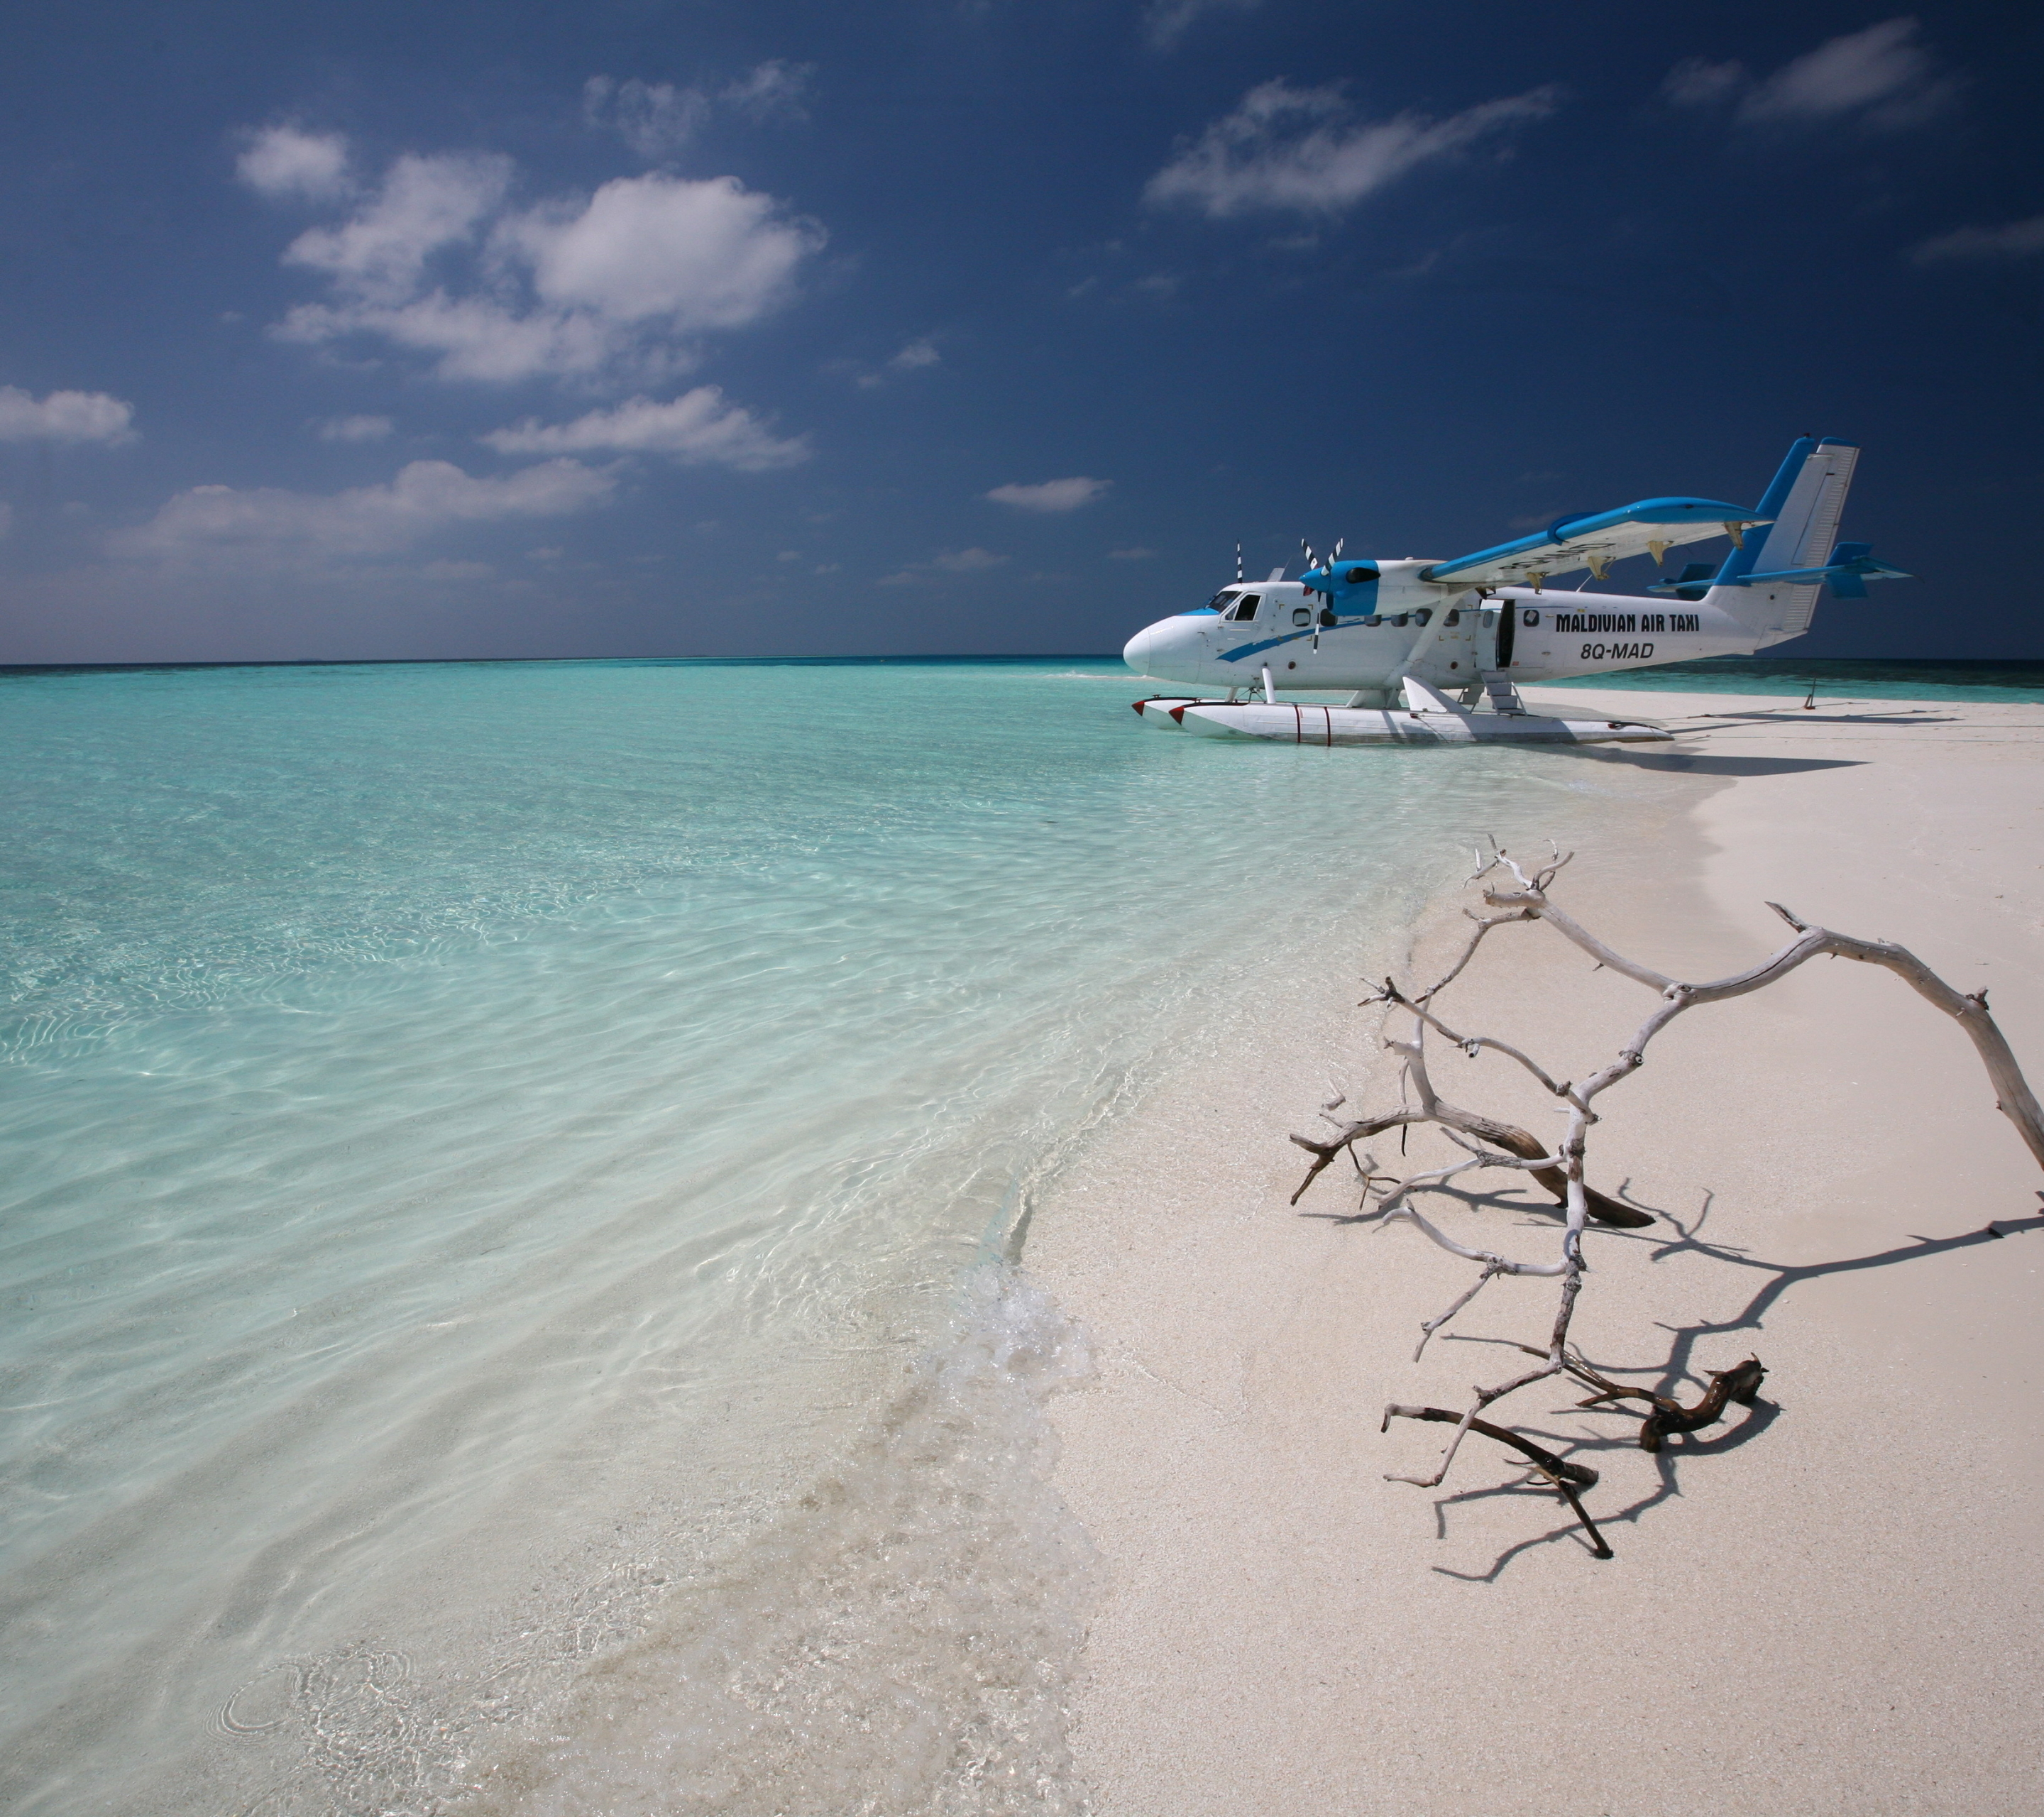 de havilland, vehicles, de havilland canada dhc 6 twin otter, seaplane, airplane, aircraft, maldives